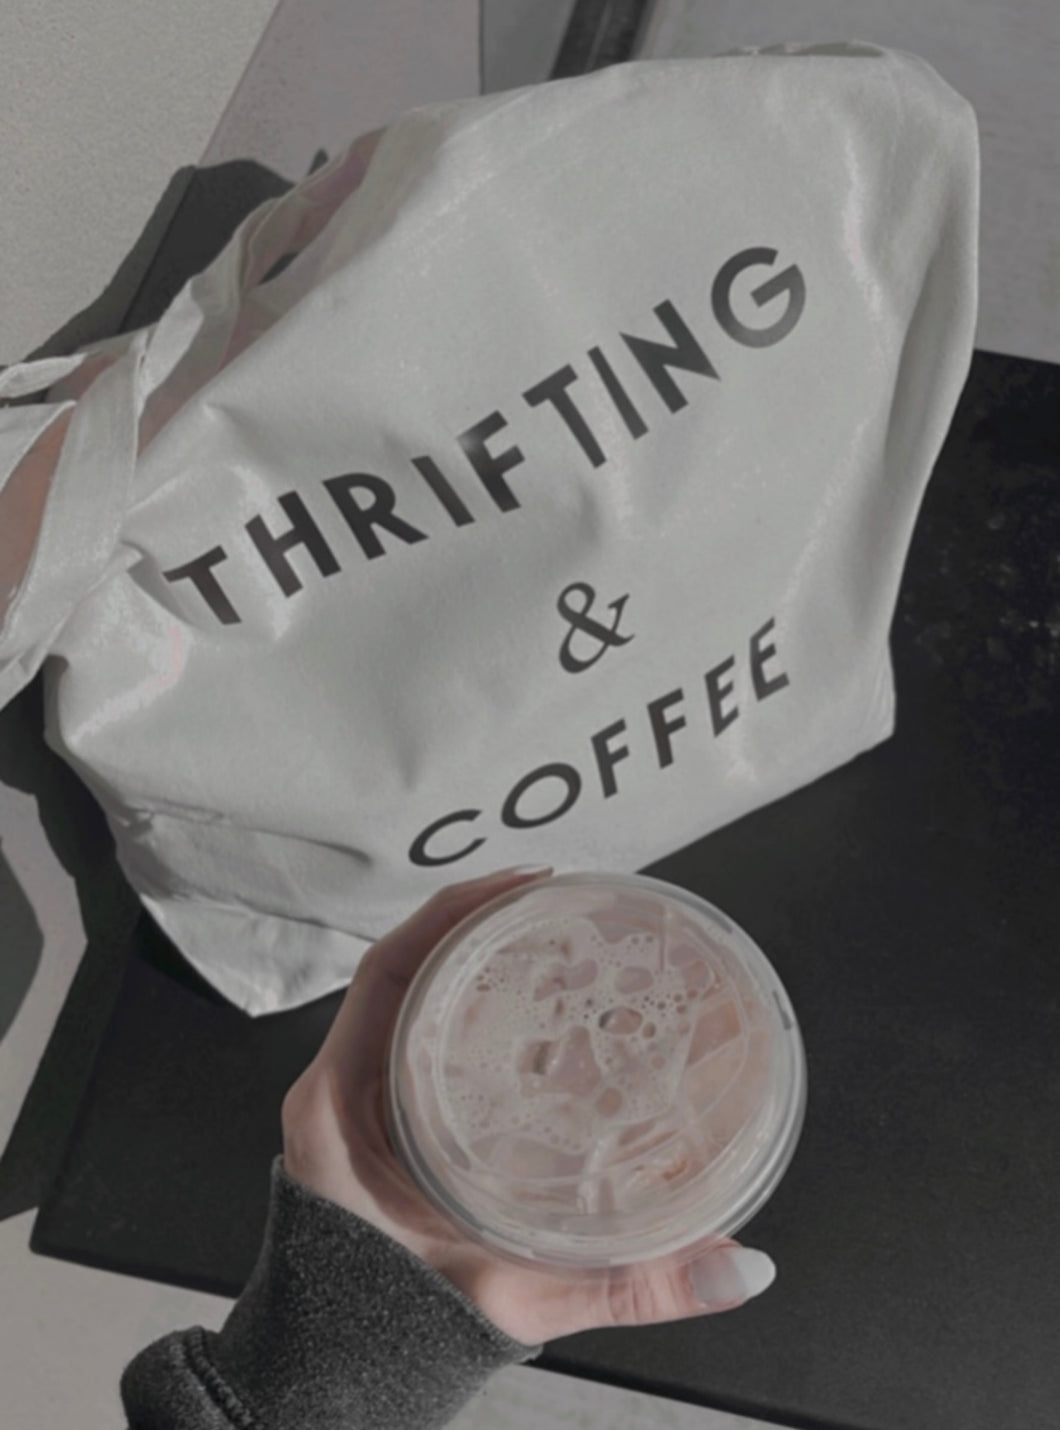 Thrifting & Coffee Tote Bag